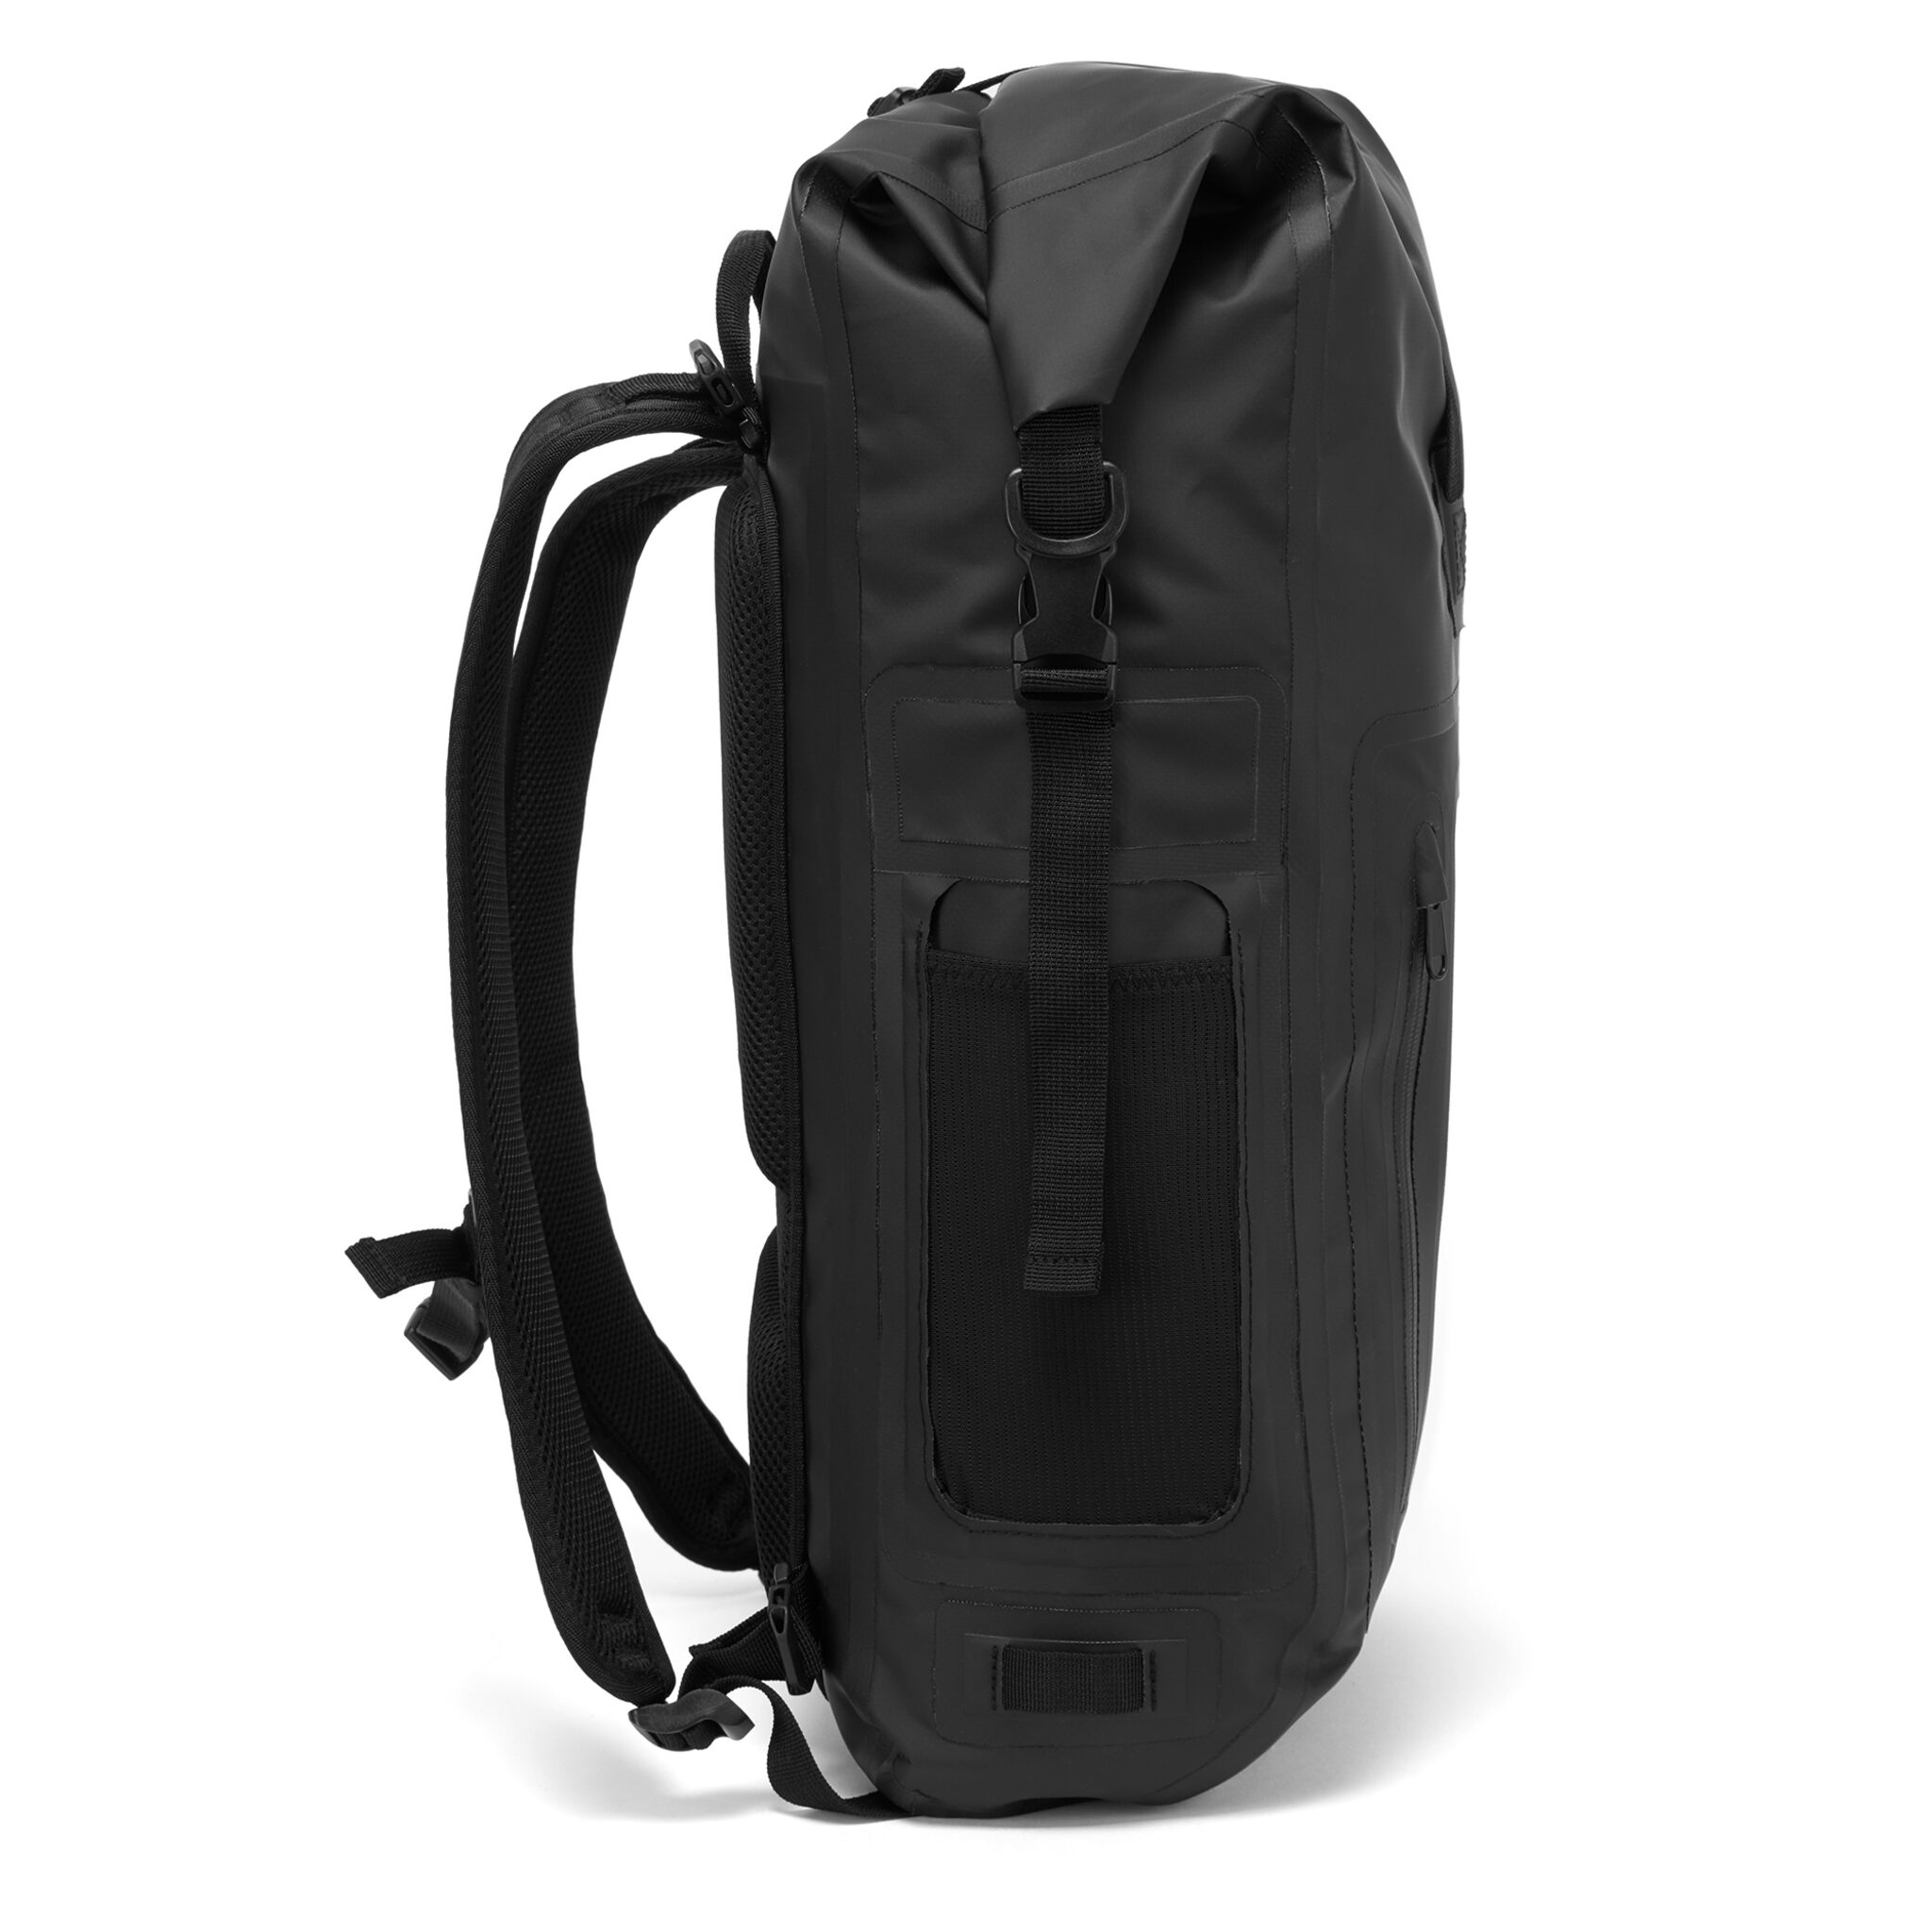 Gill backpack VOYAGER 30 l